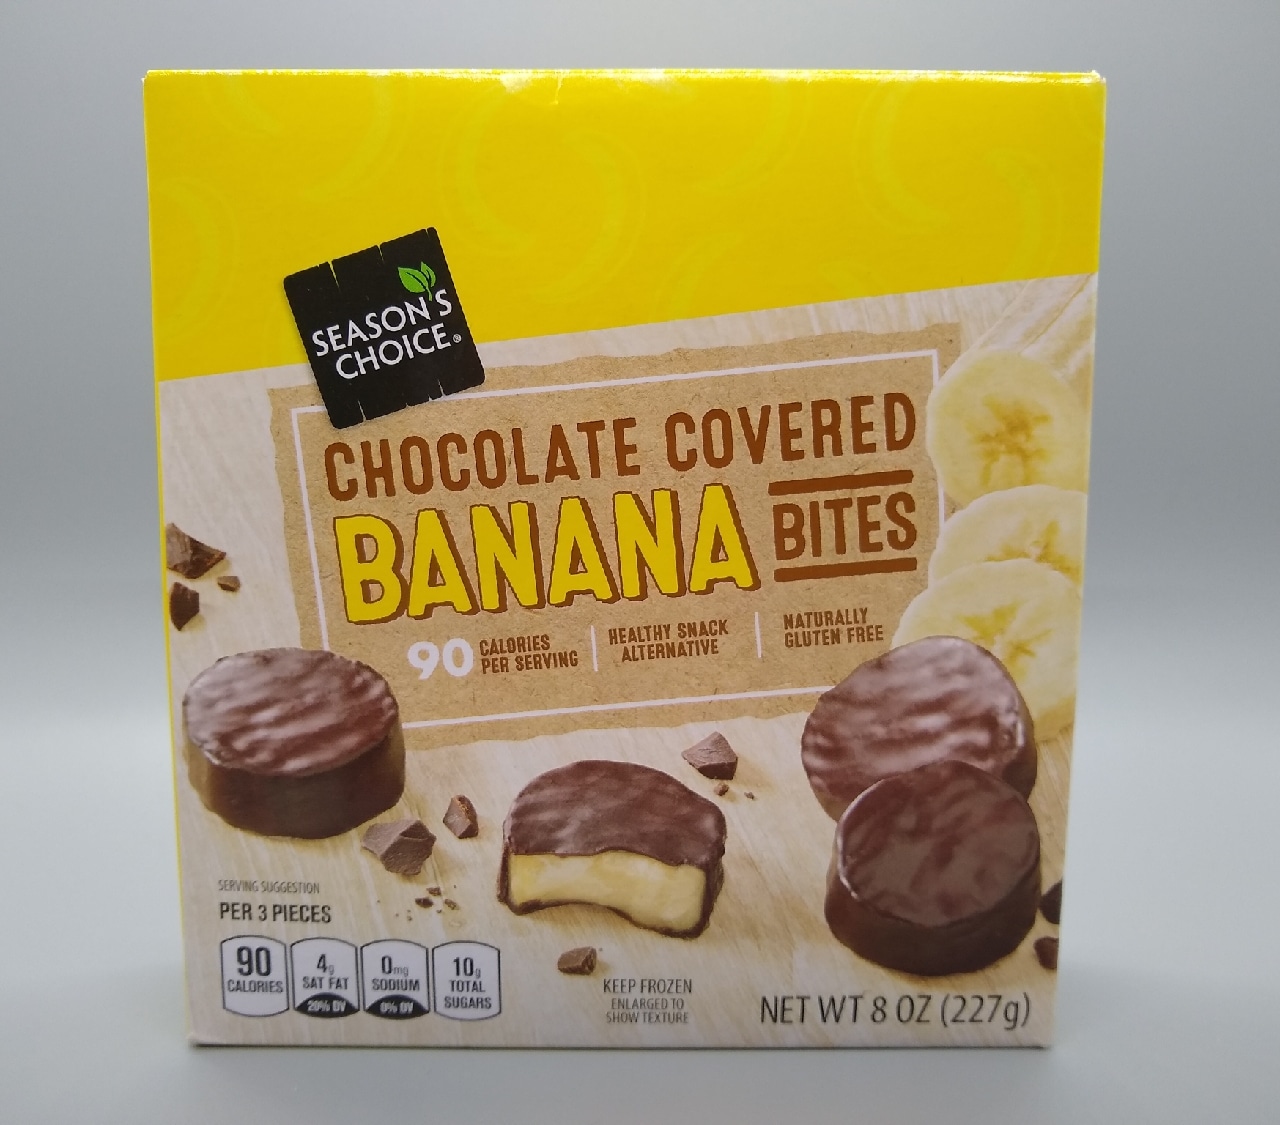 Season's Choice Chocolate Covered Banana Bites